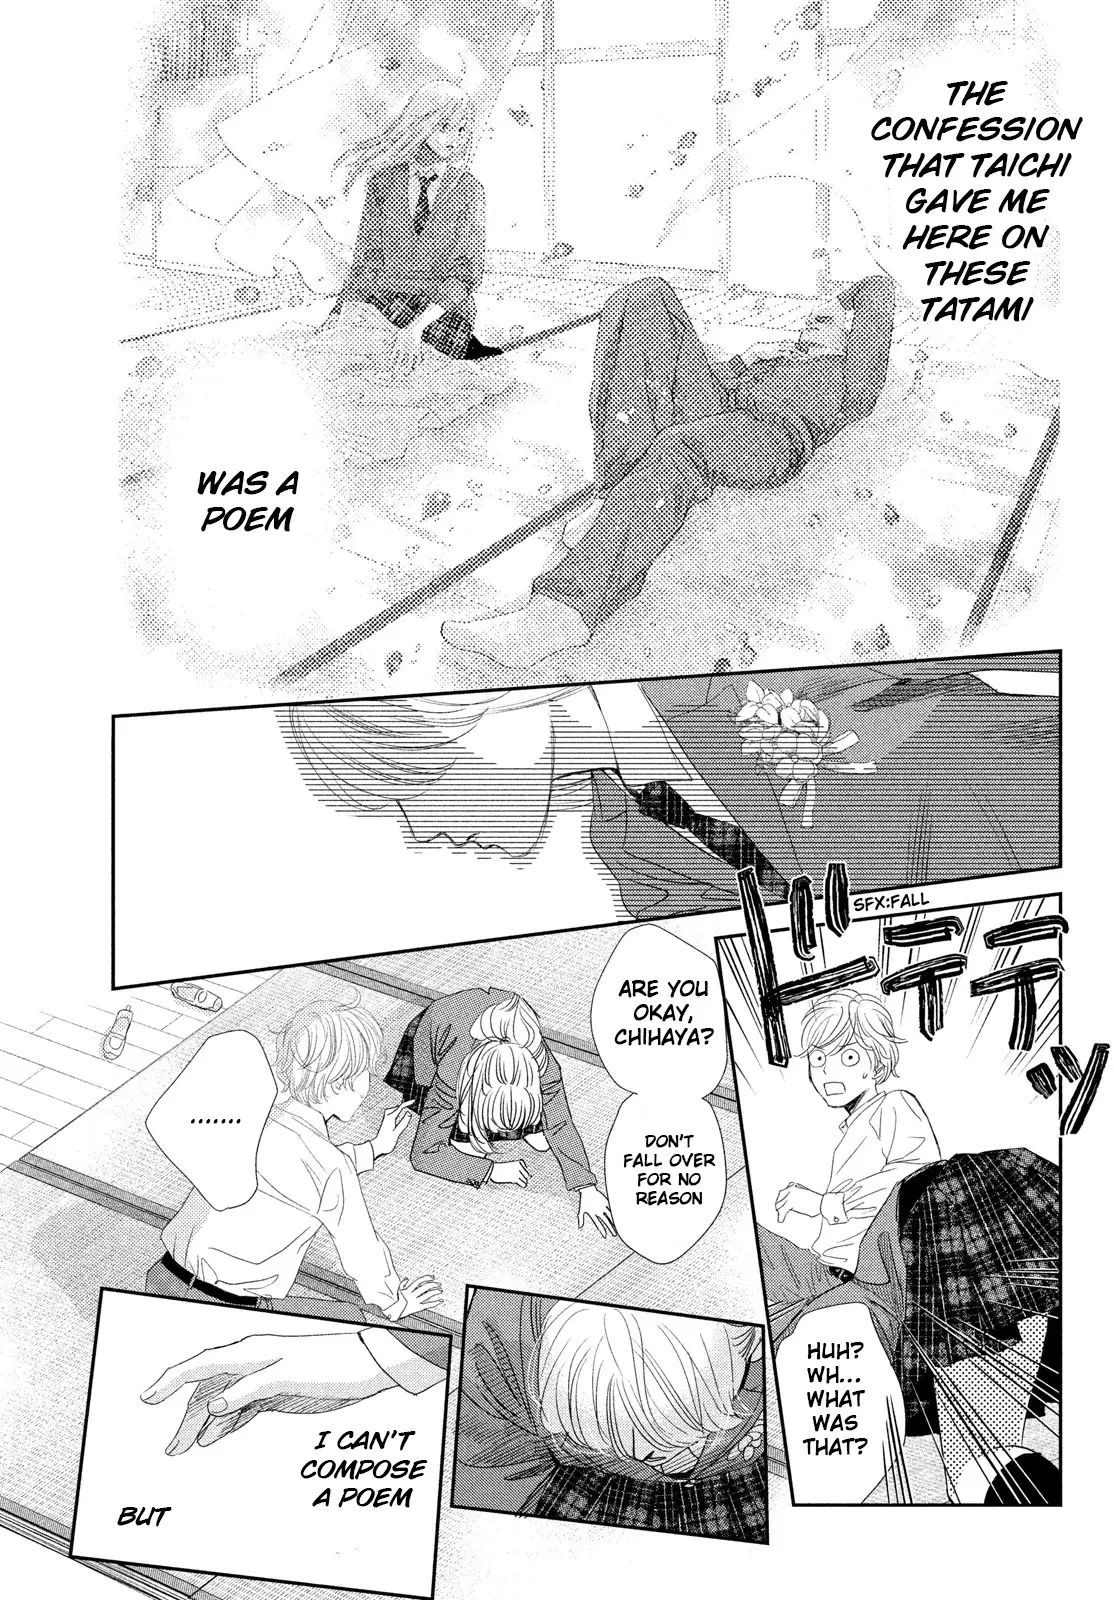 Chihayafuru - 247 page 68-7393a5e0